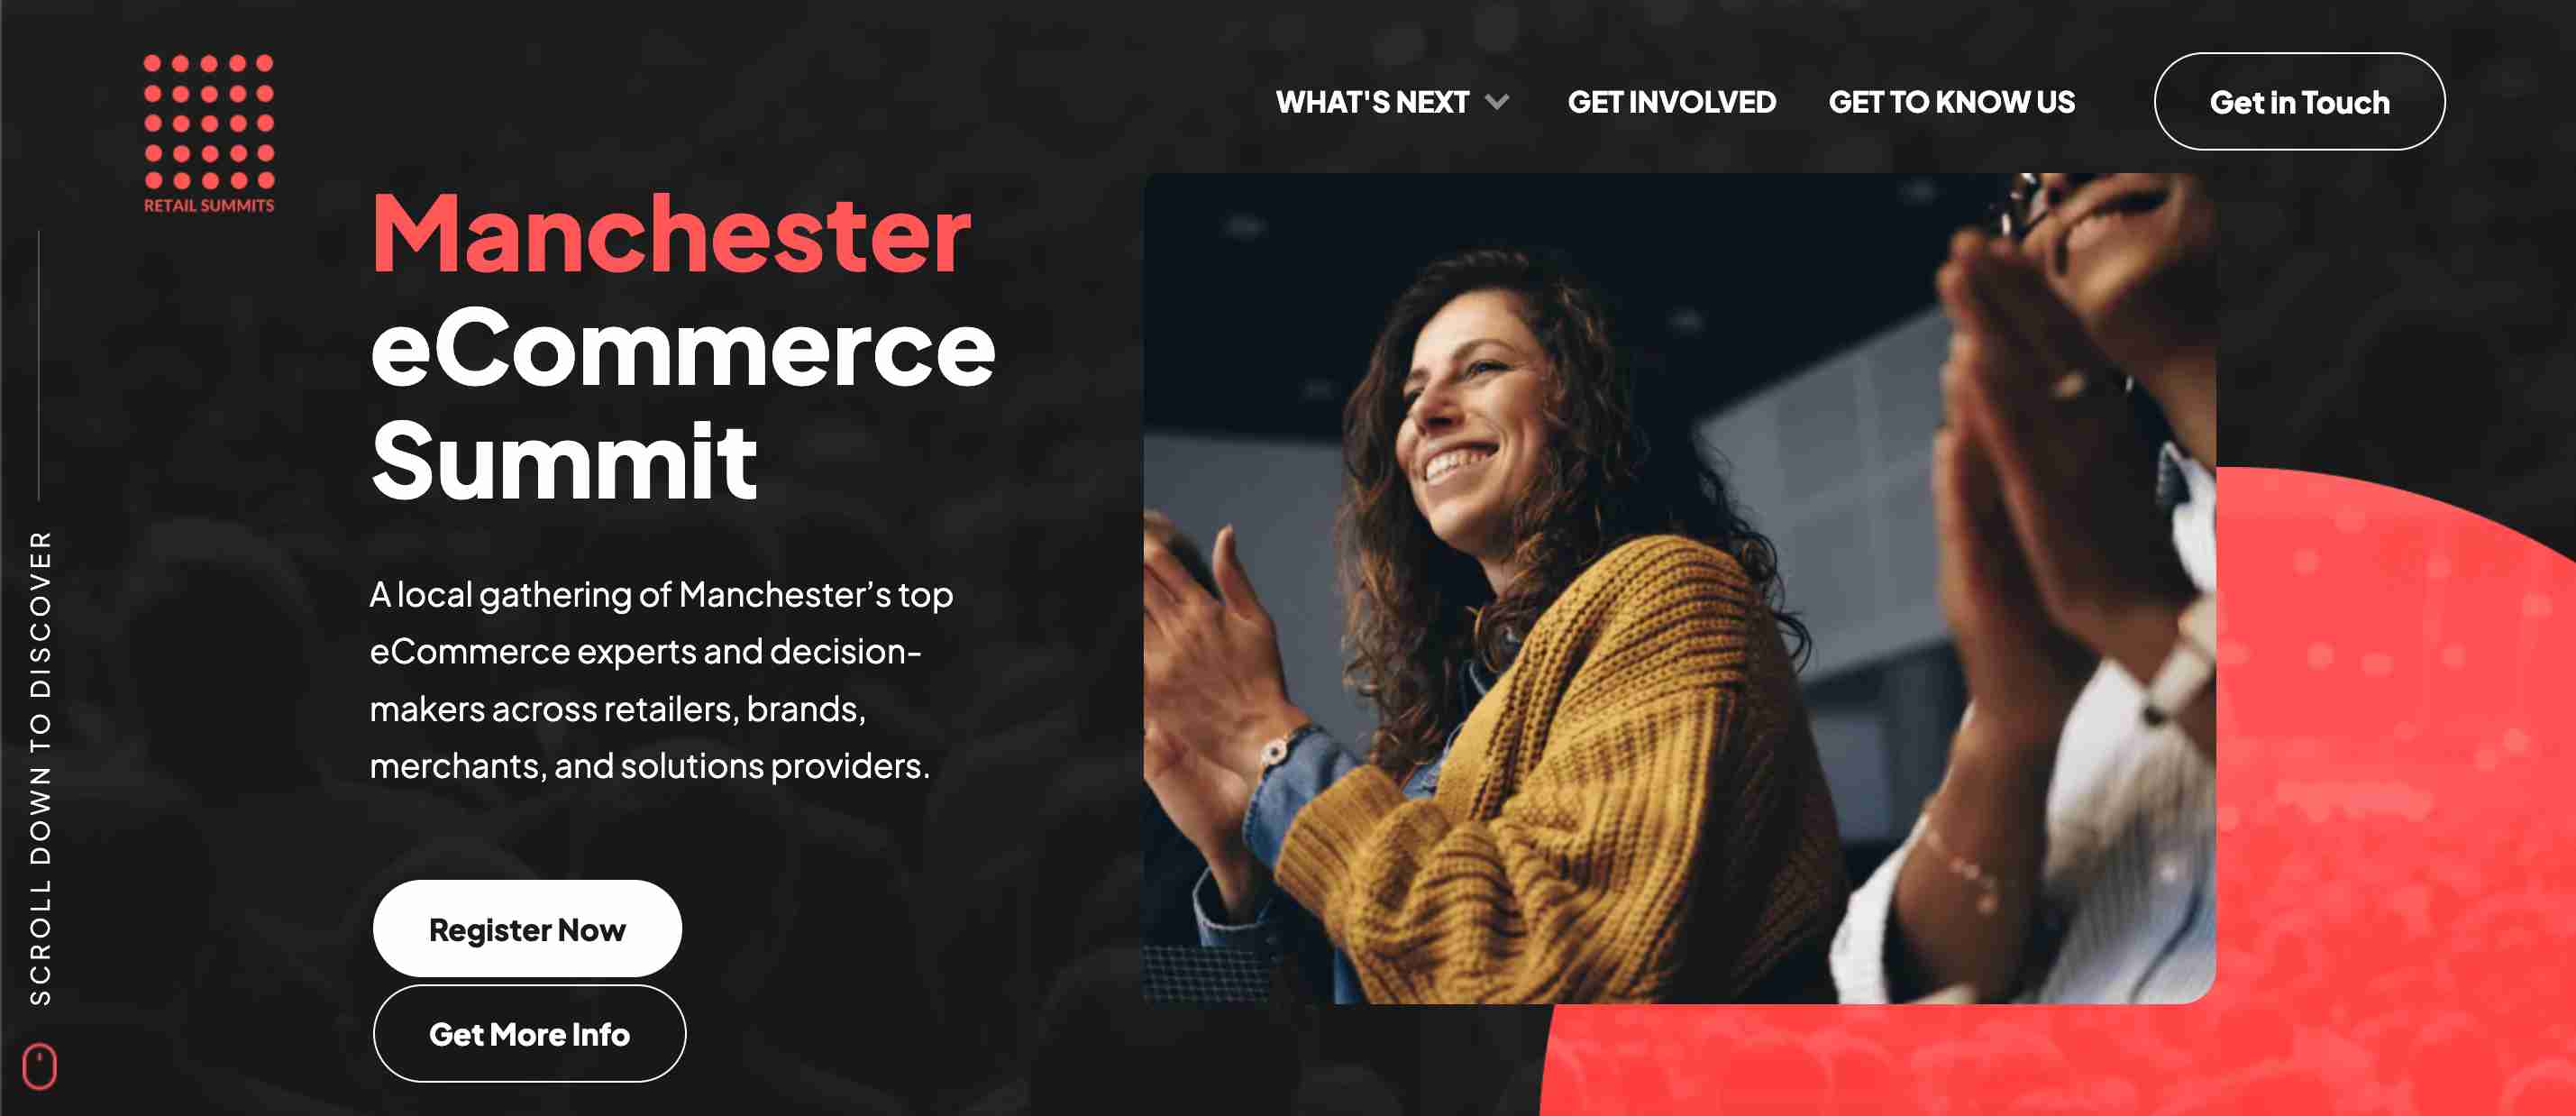 Manchester eCommerce Summit